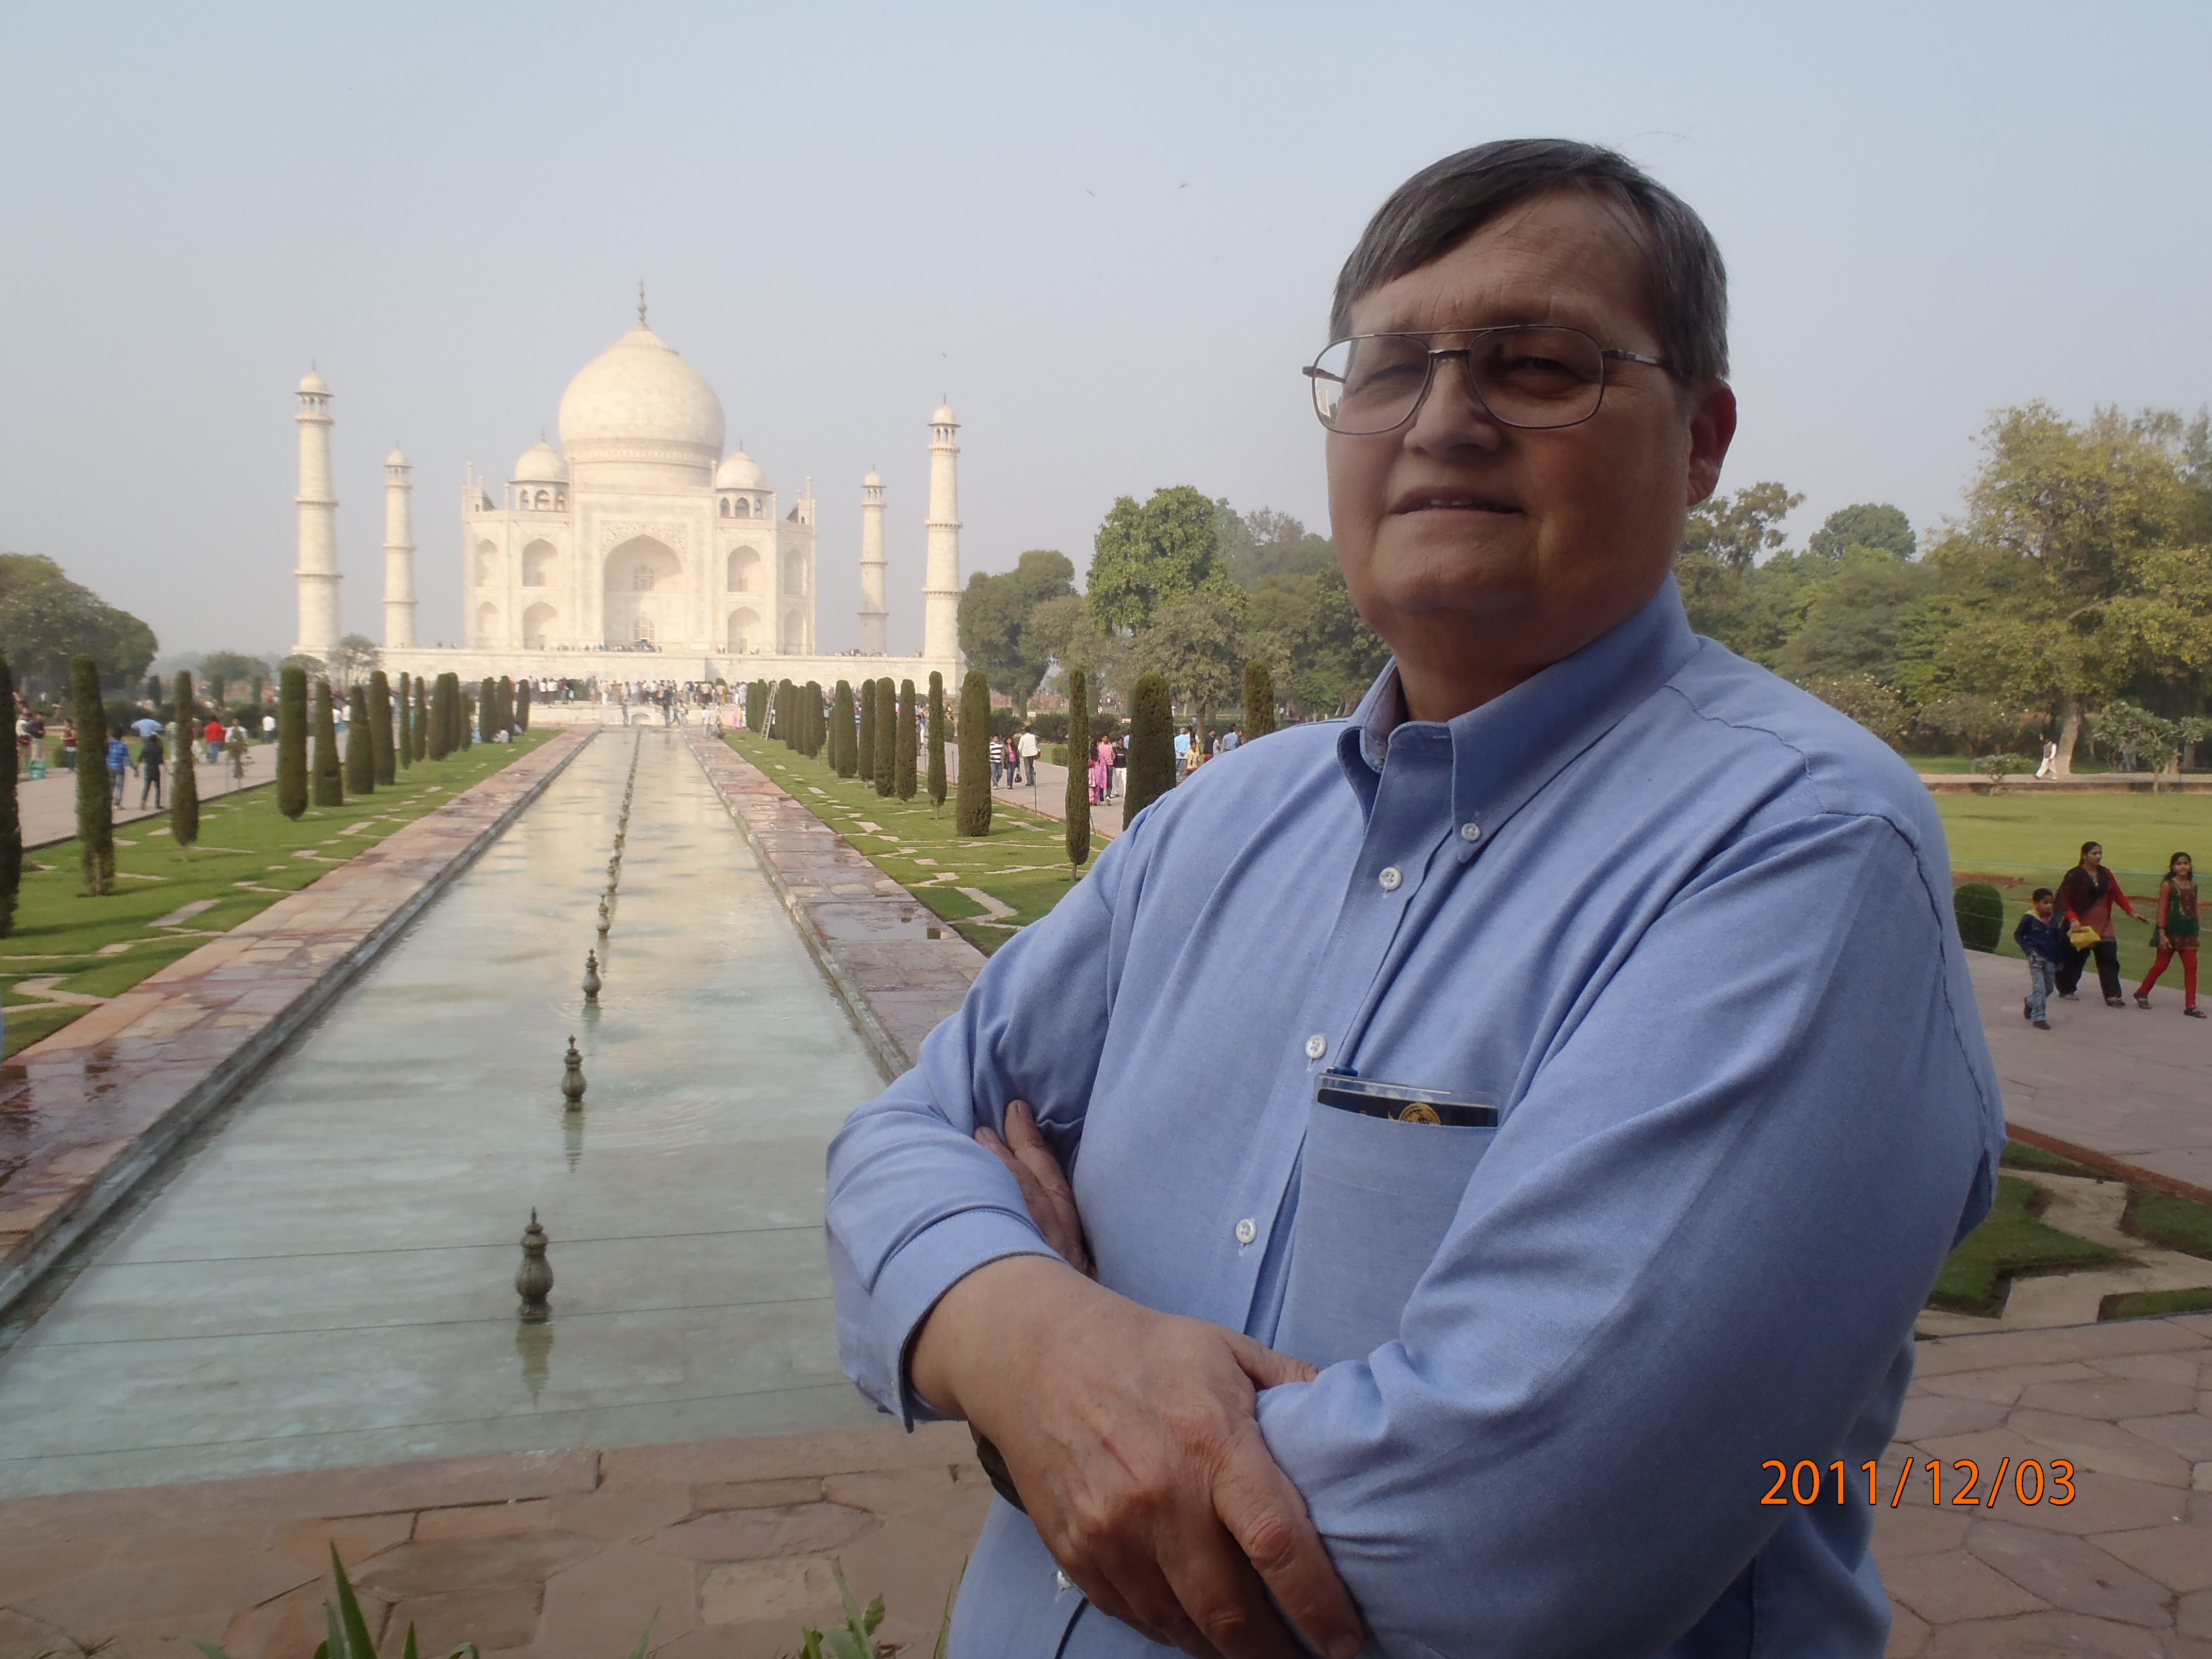 Walt Olson standing with Taj Mahal in background